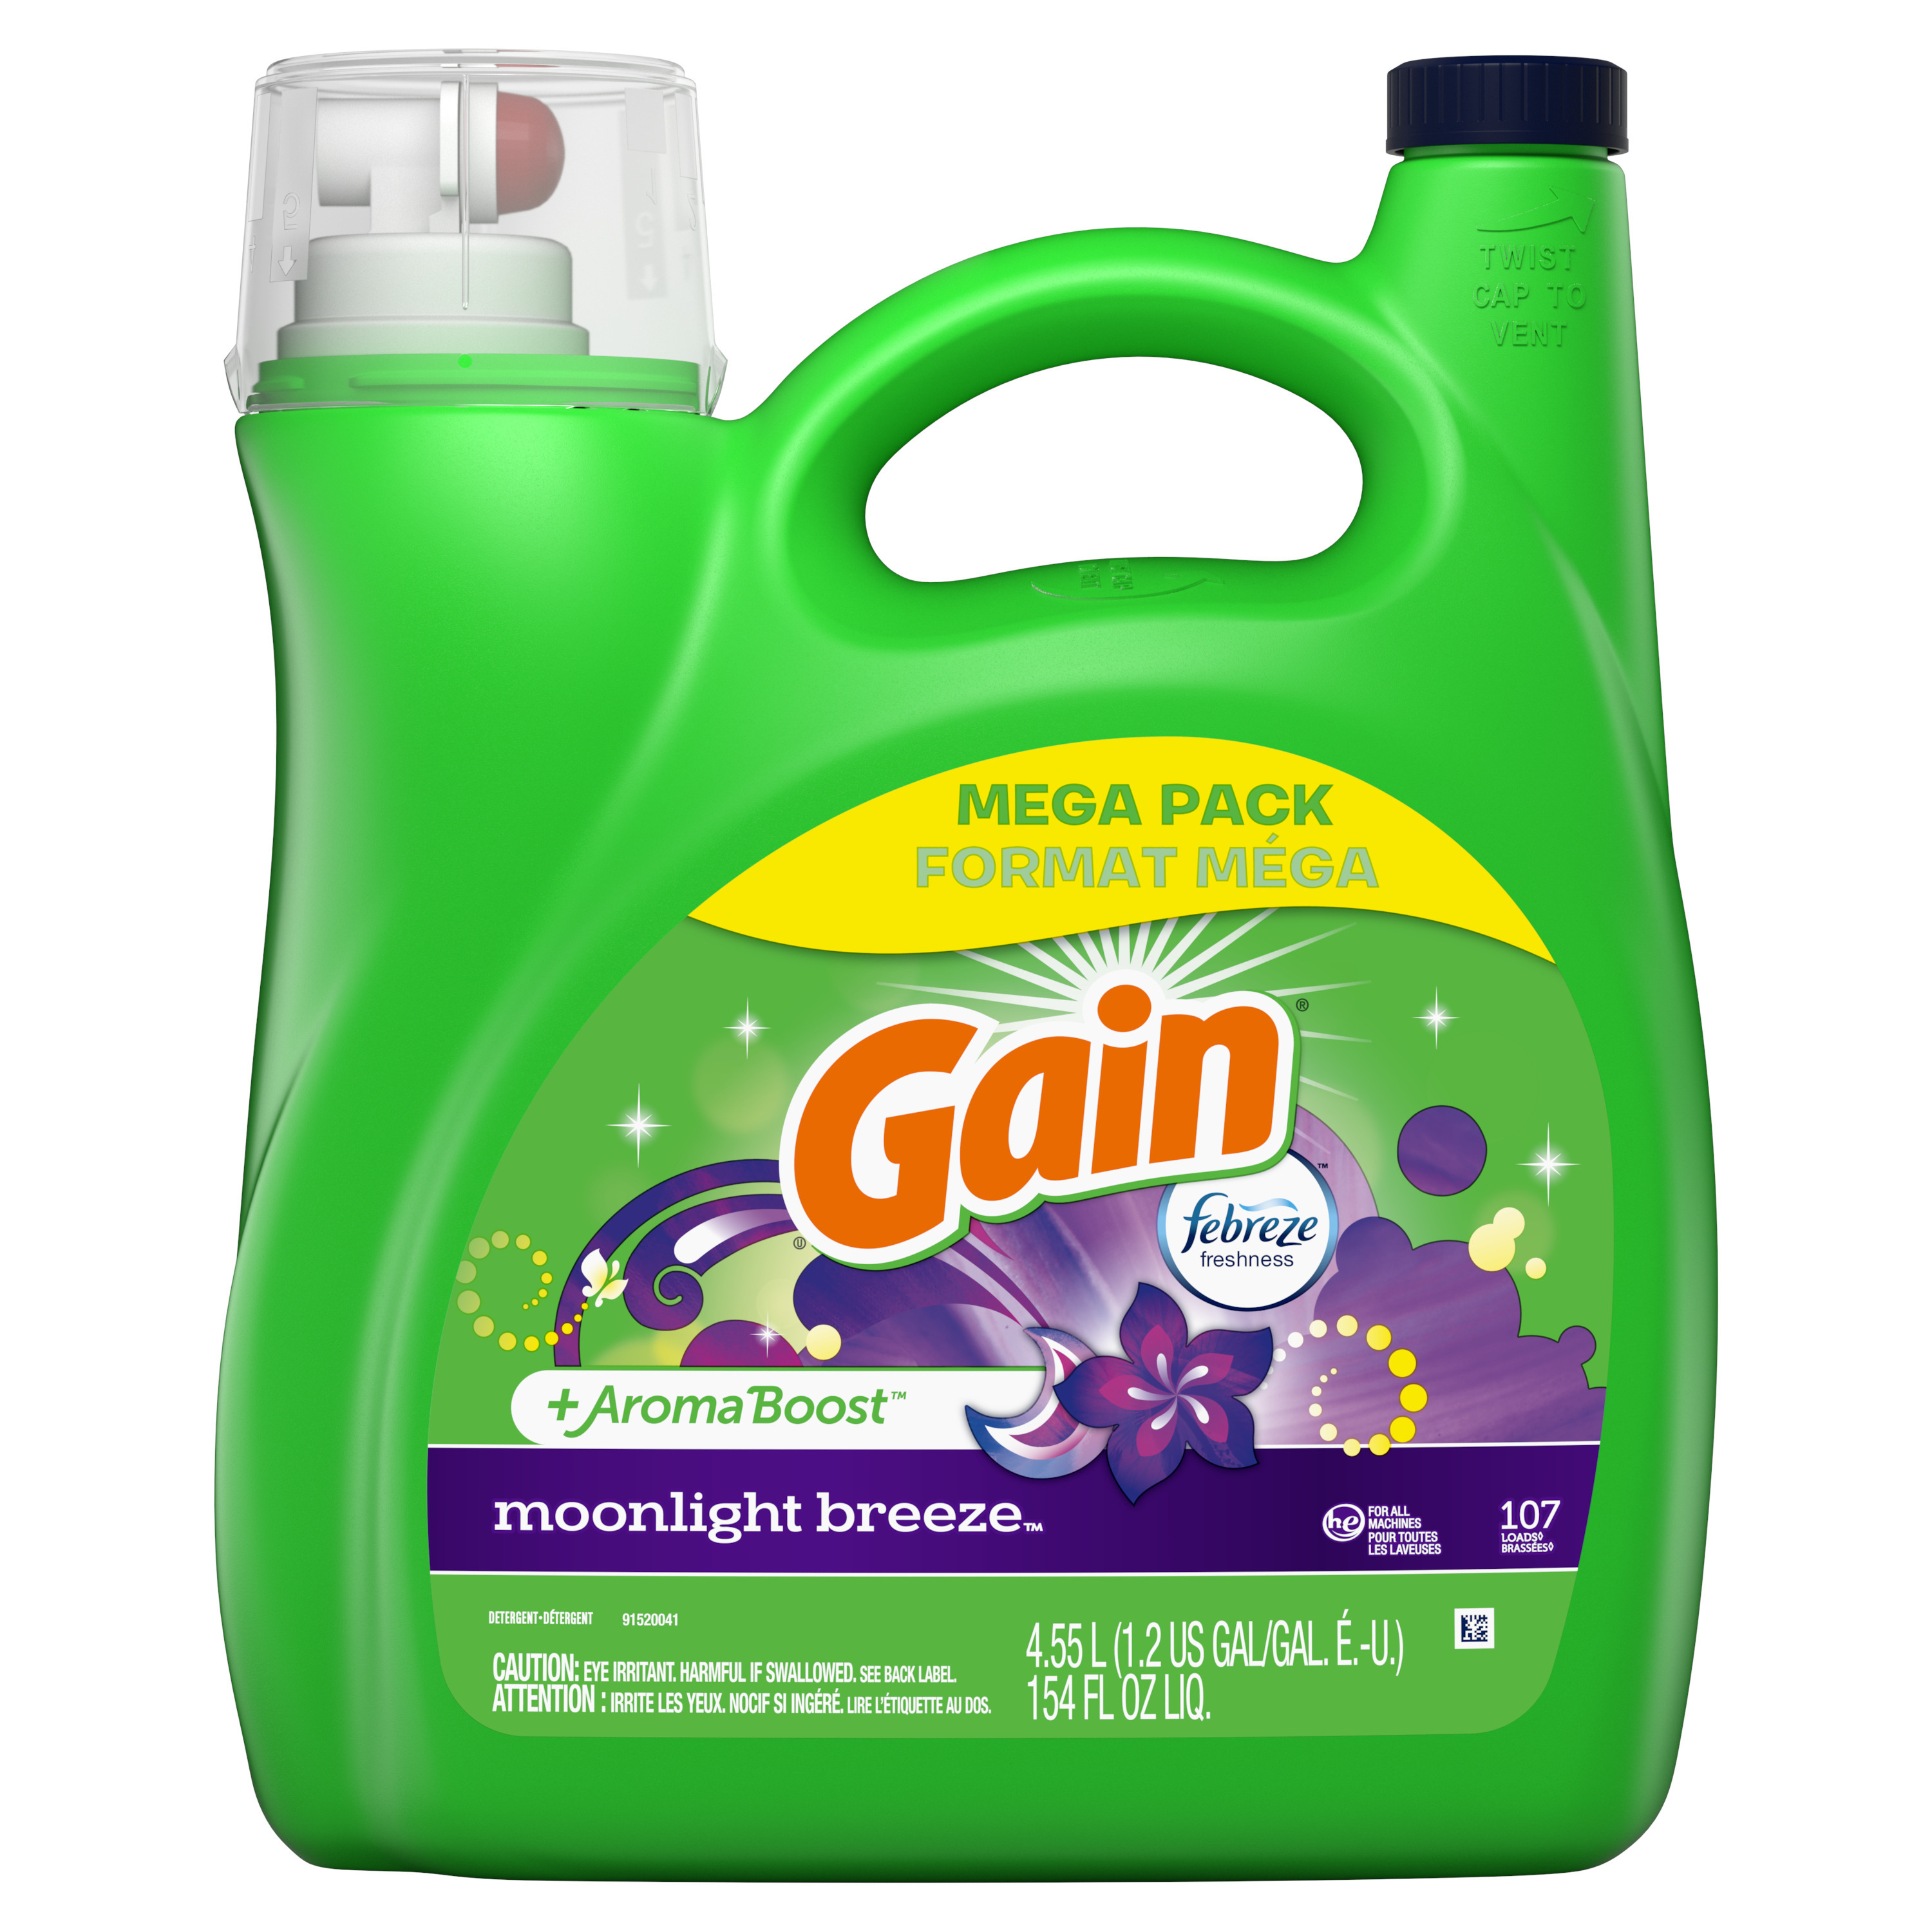 Gain + Aroma Boost Liquid Laundry Detergent, Moonlight Breeze Scent, 107 Loads, 154 fl oz, HE Compatible - image 7 of 8